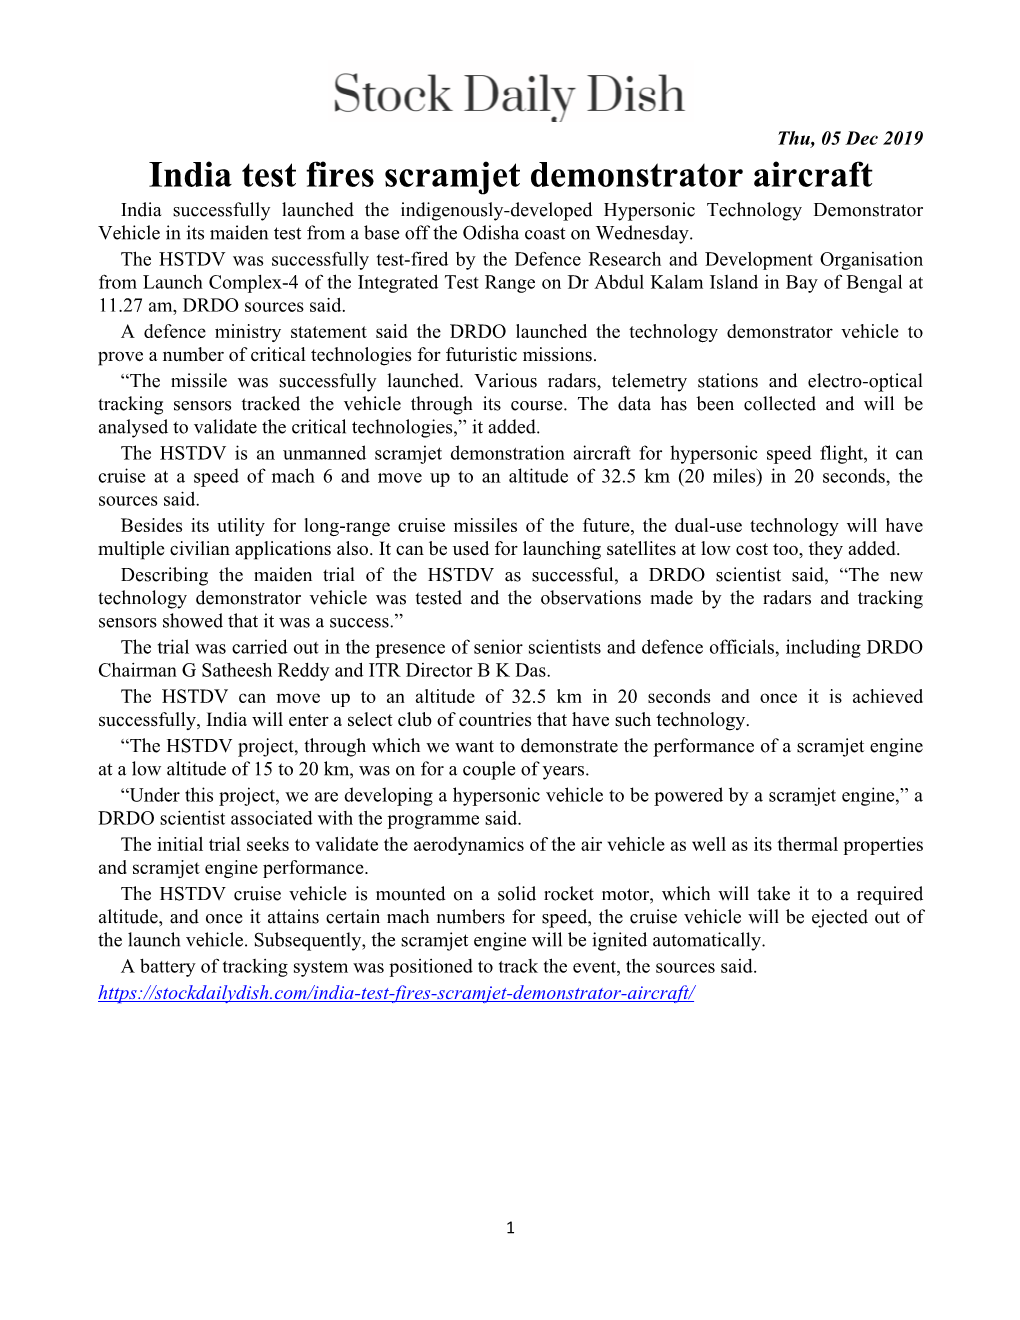 India Test Fires Scramjet Demonstrator Aircraft